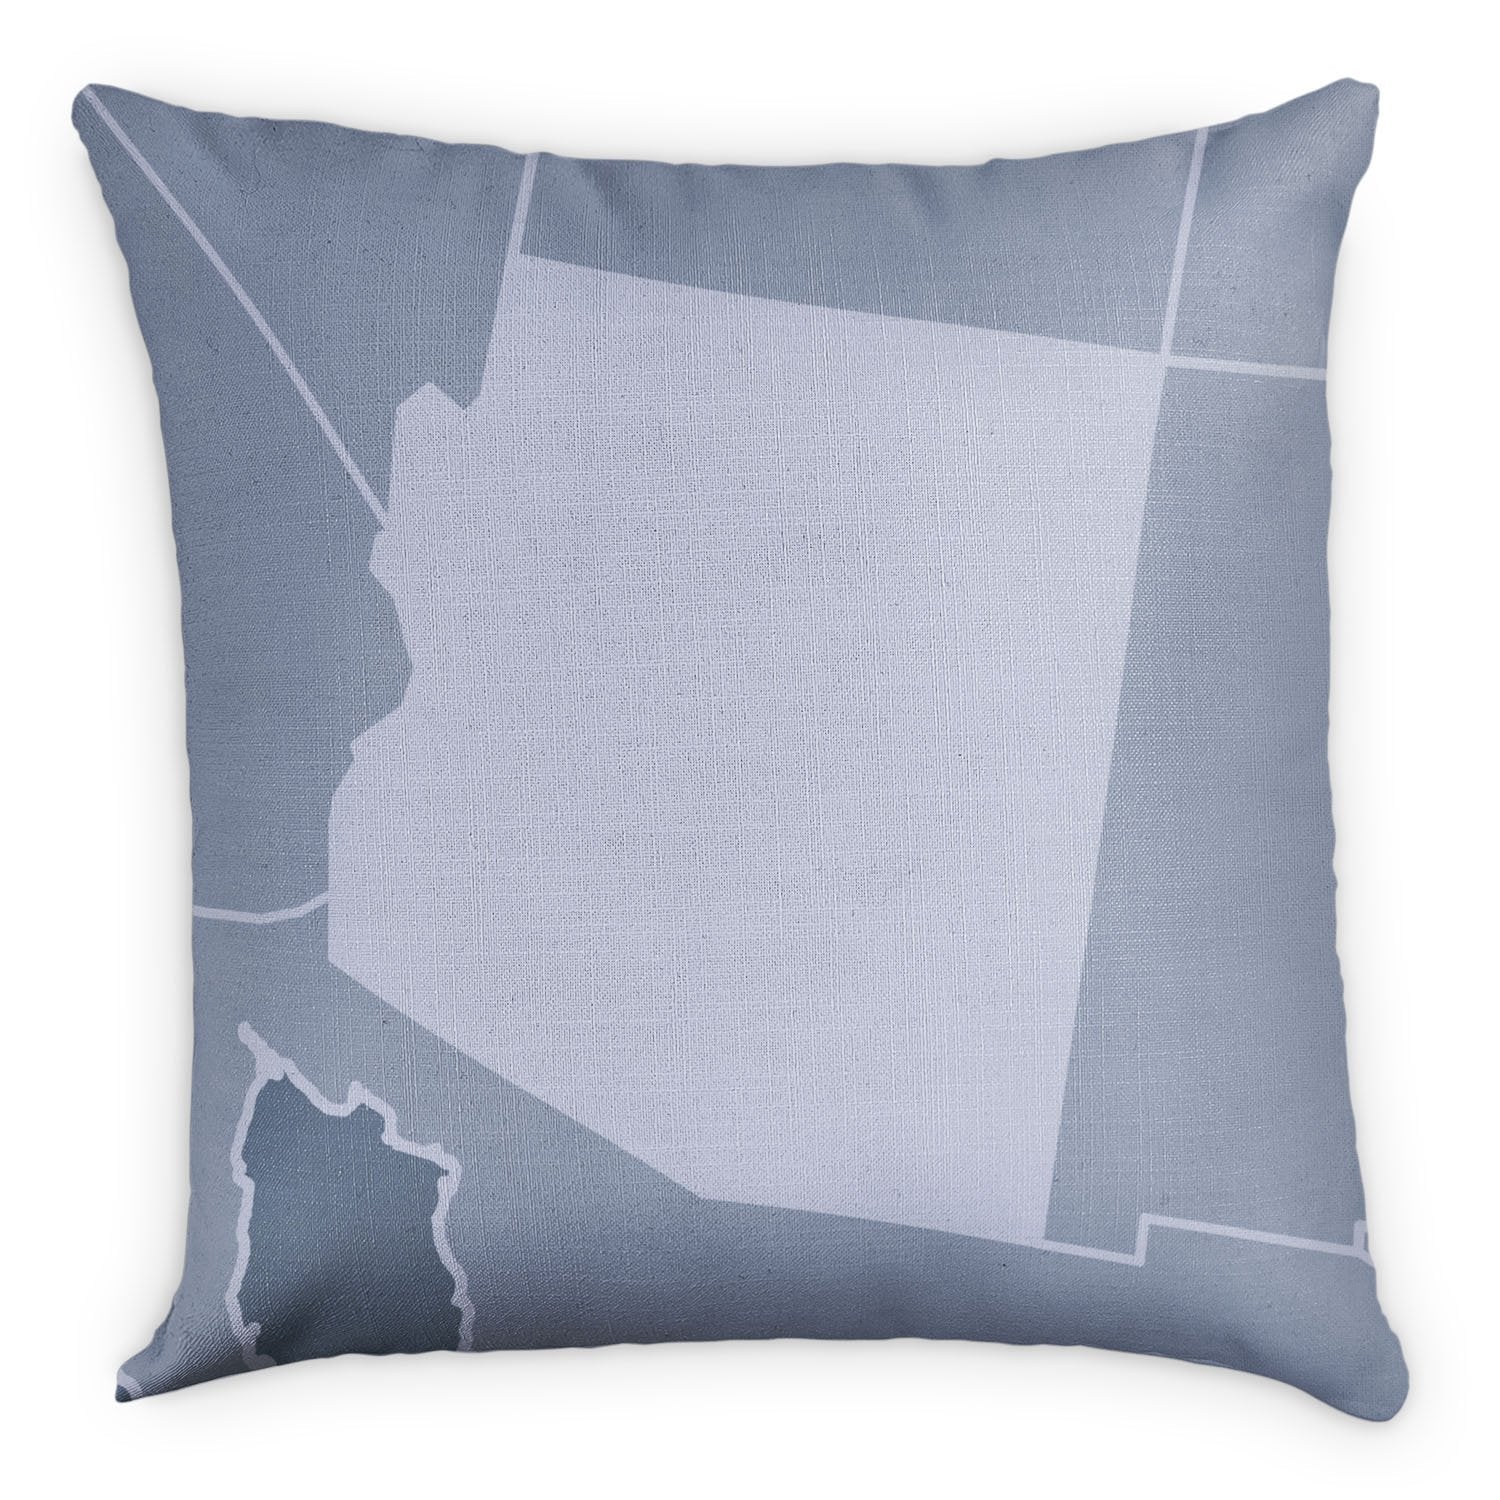 Arizona Square Pillow - Linen -  - Knotty Tie Co.